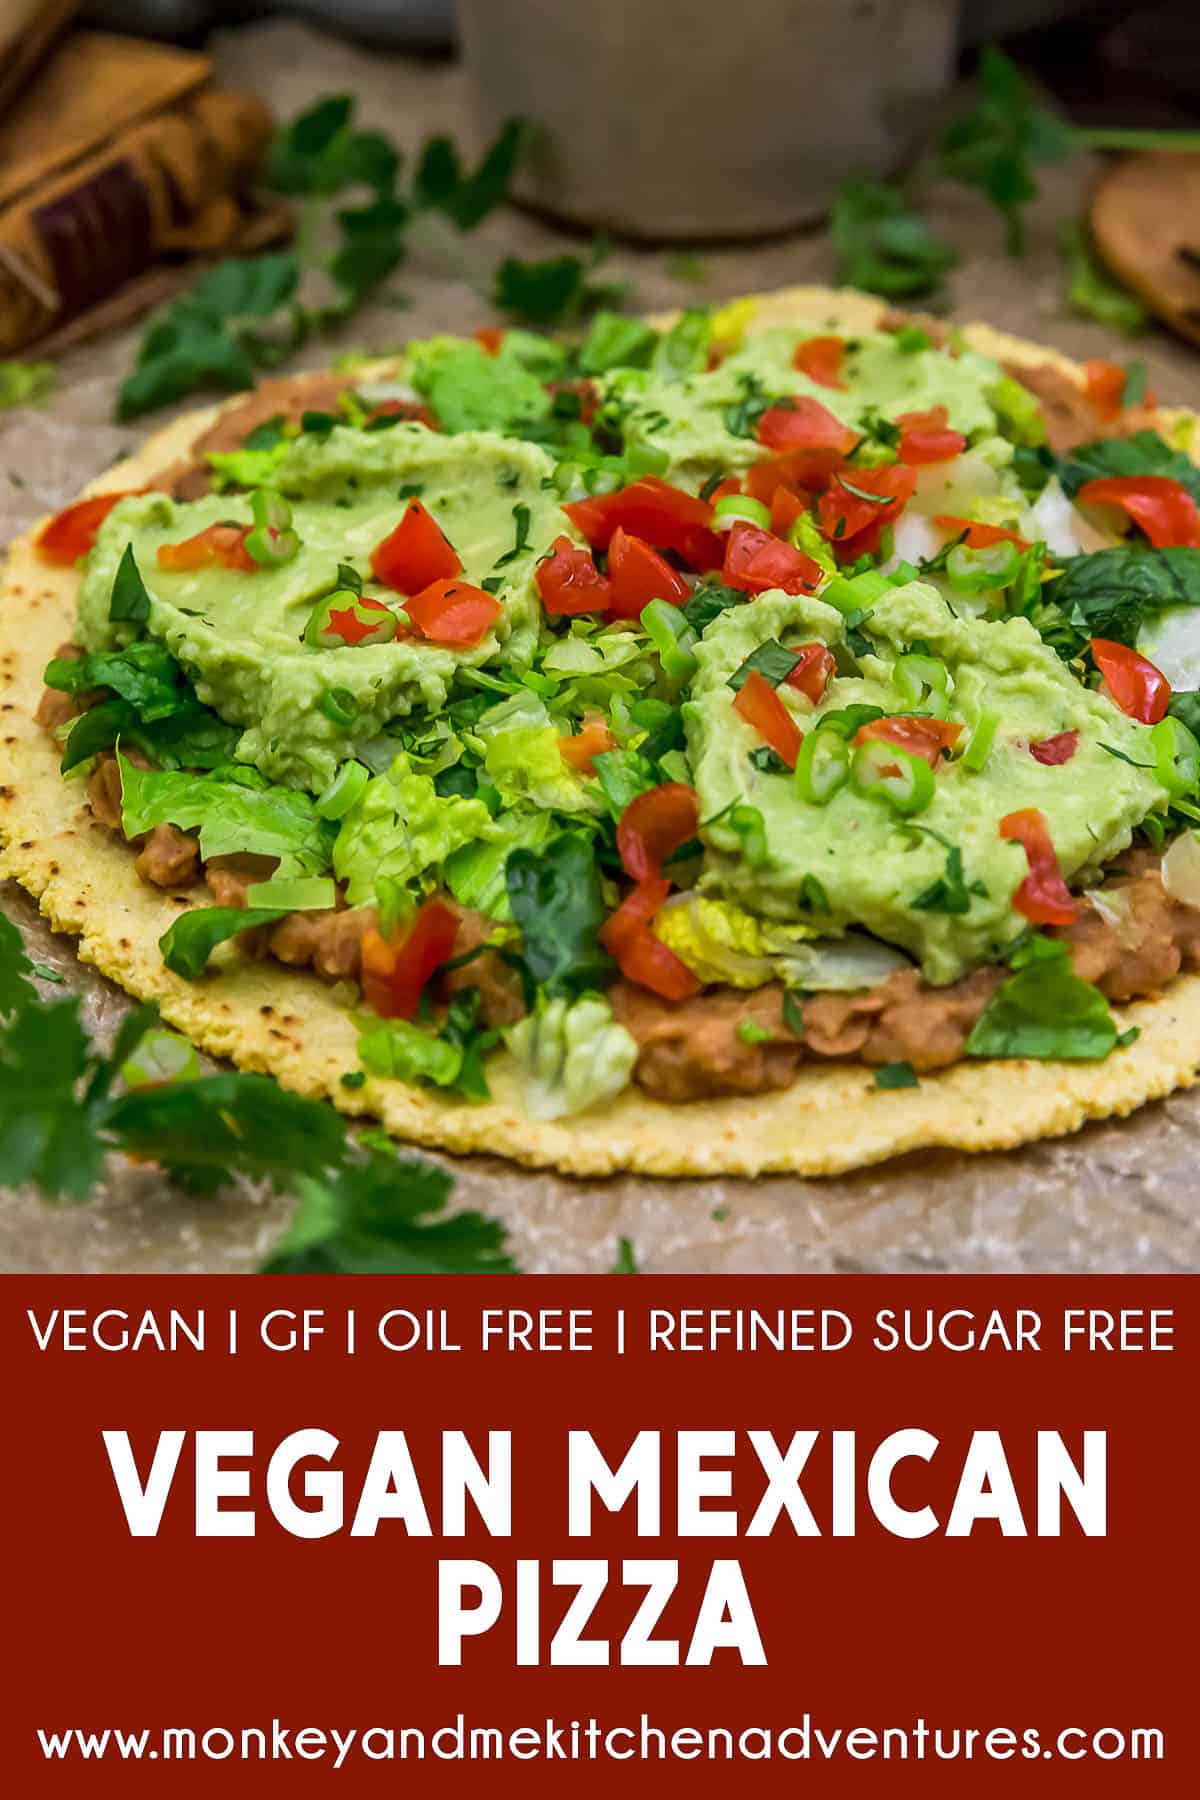 Vegan Mexican Pizza with text description